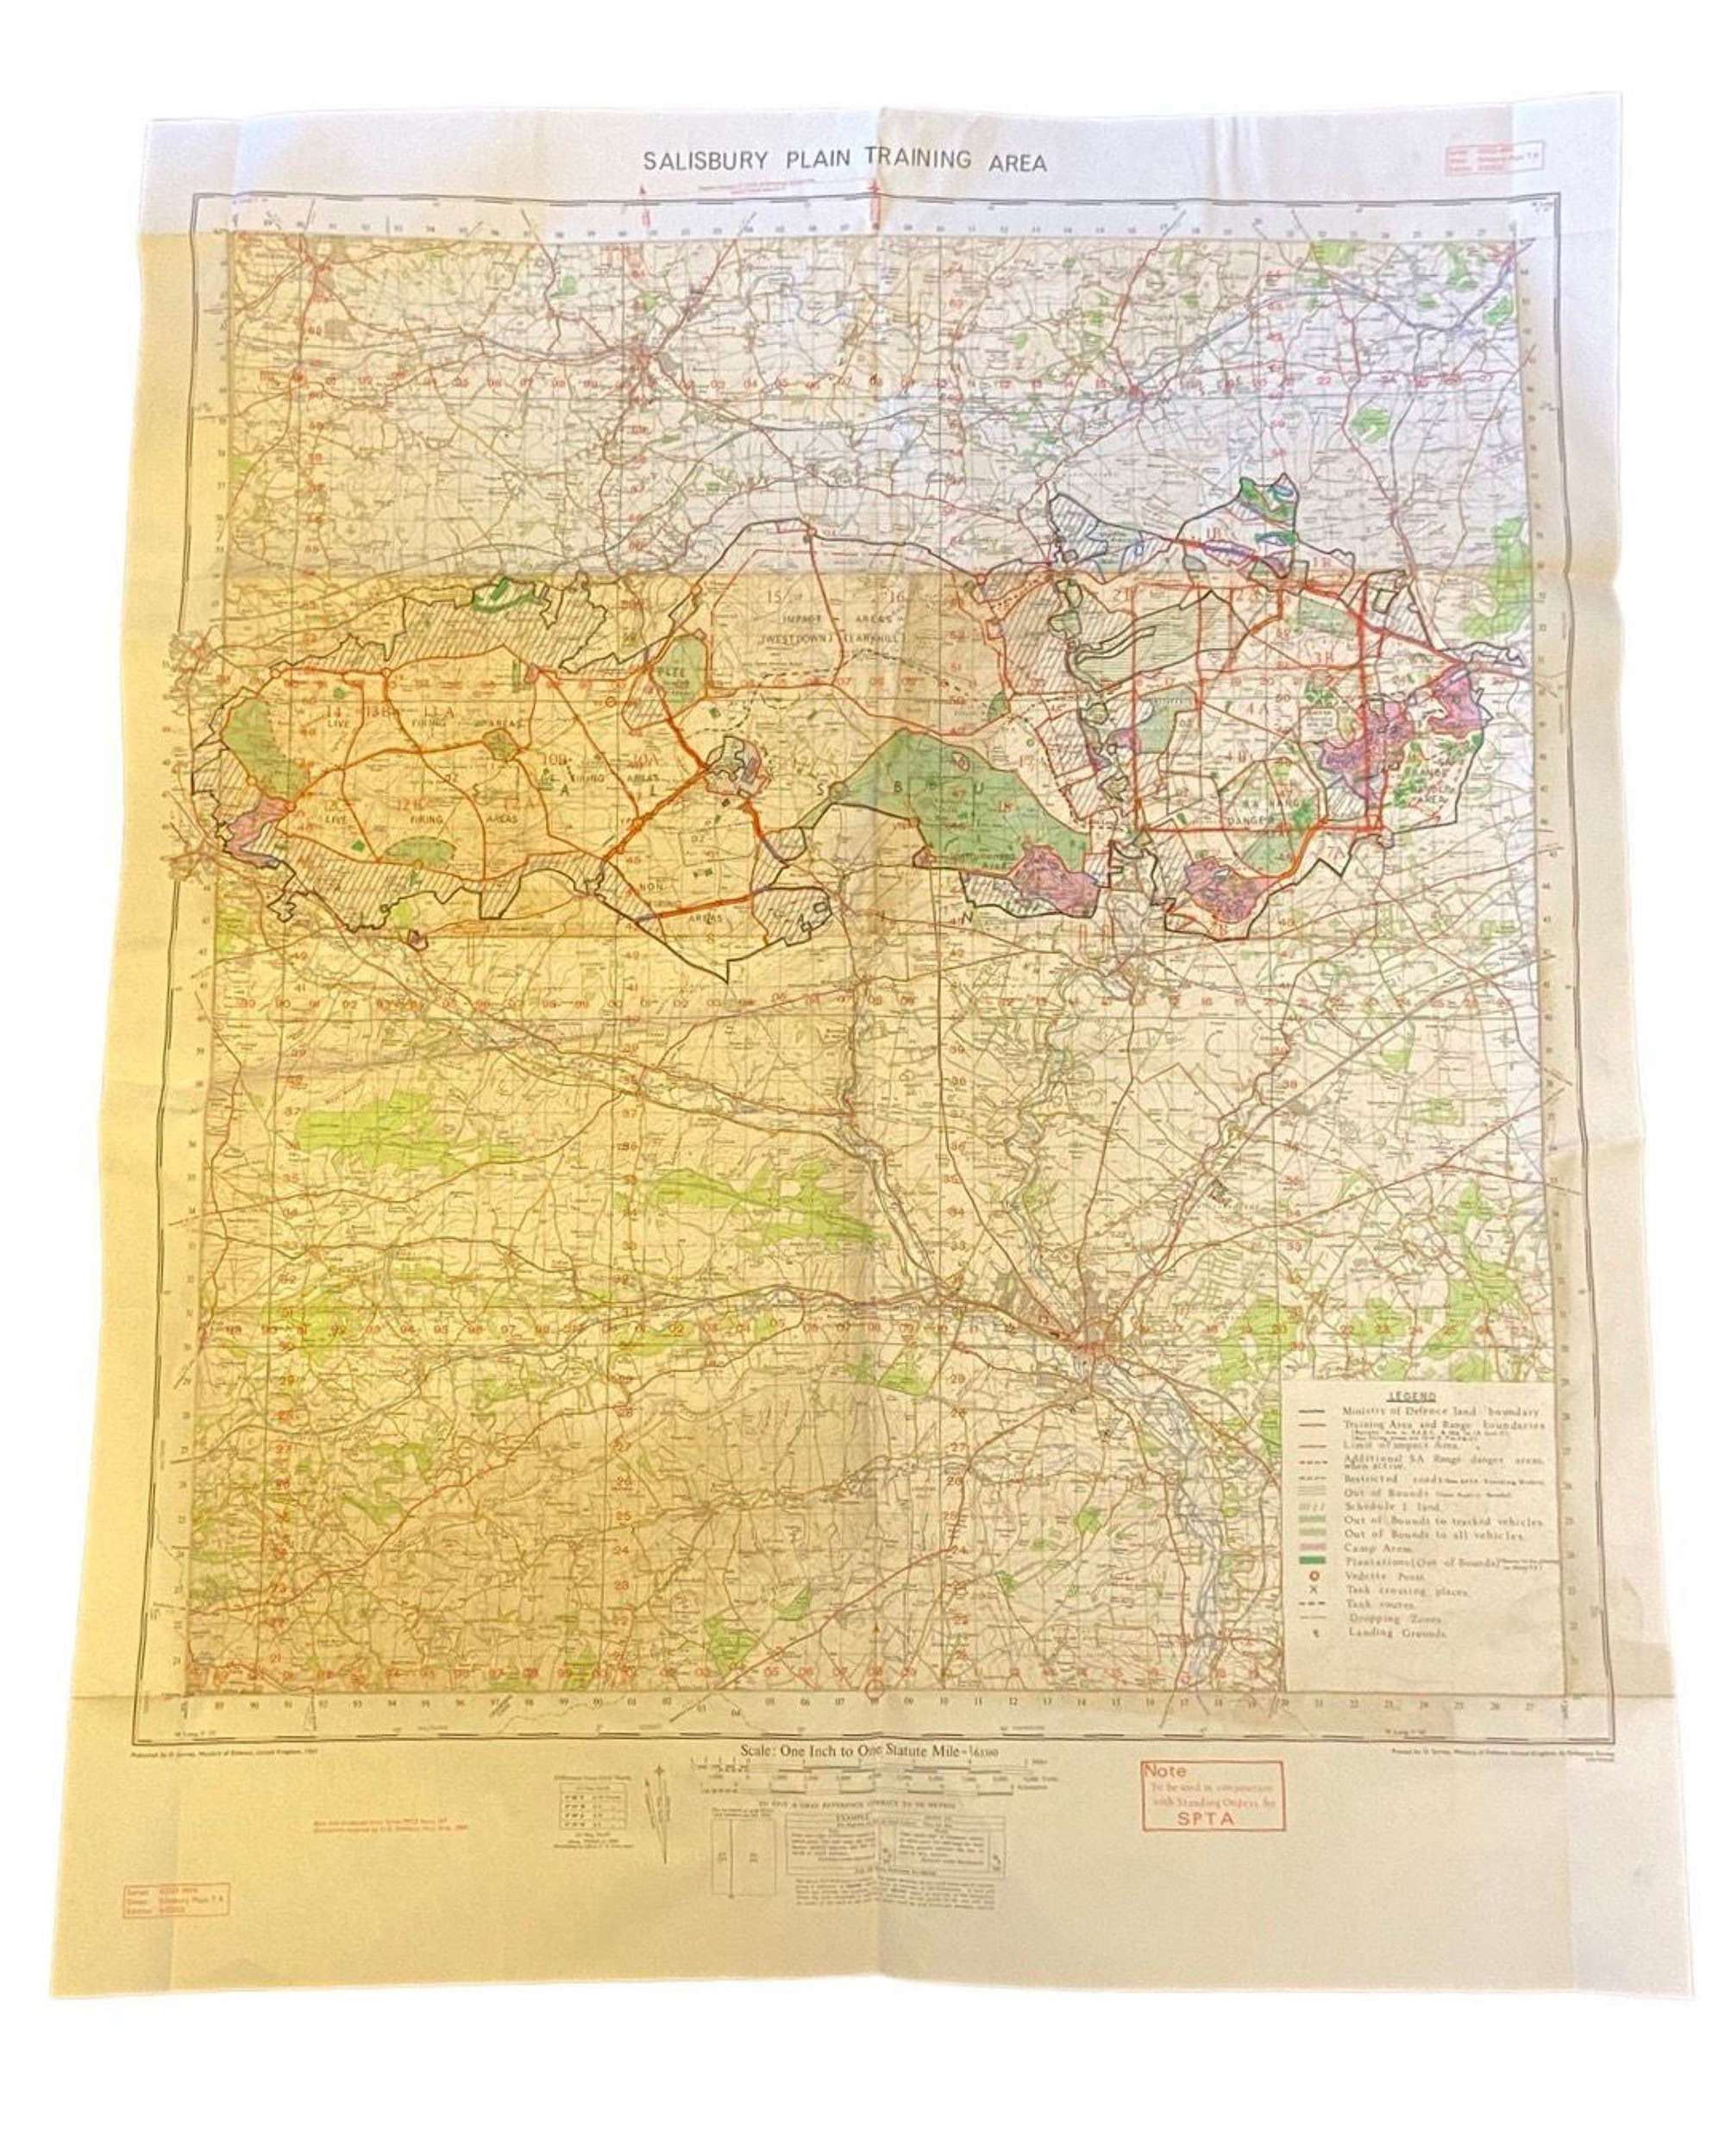 Post WW2 British Army Salisbury Training Area 1969 MOD Map